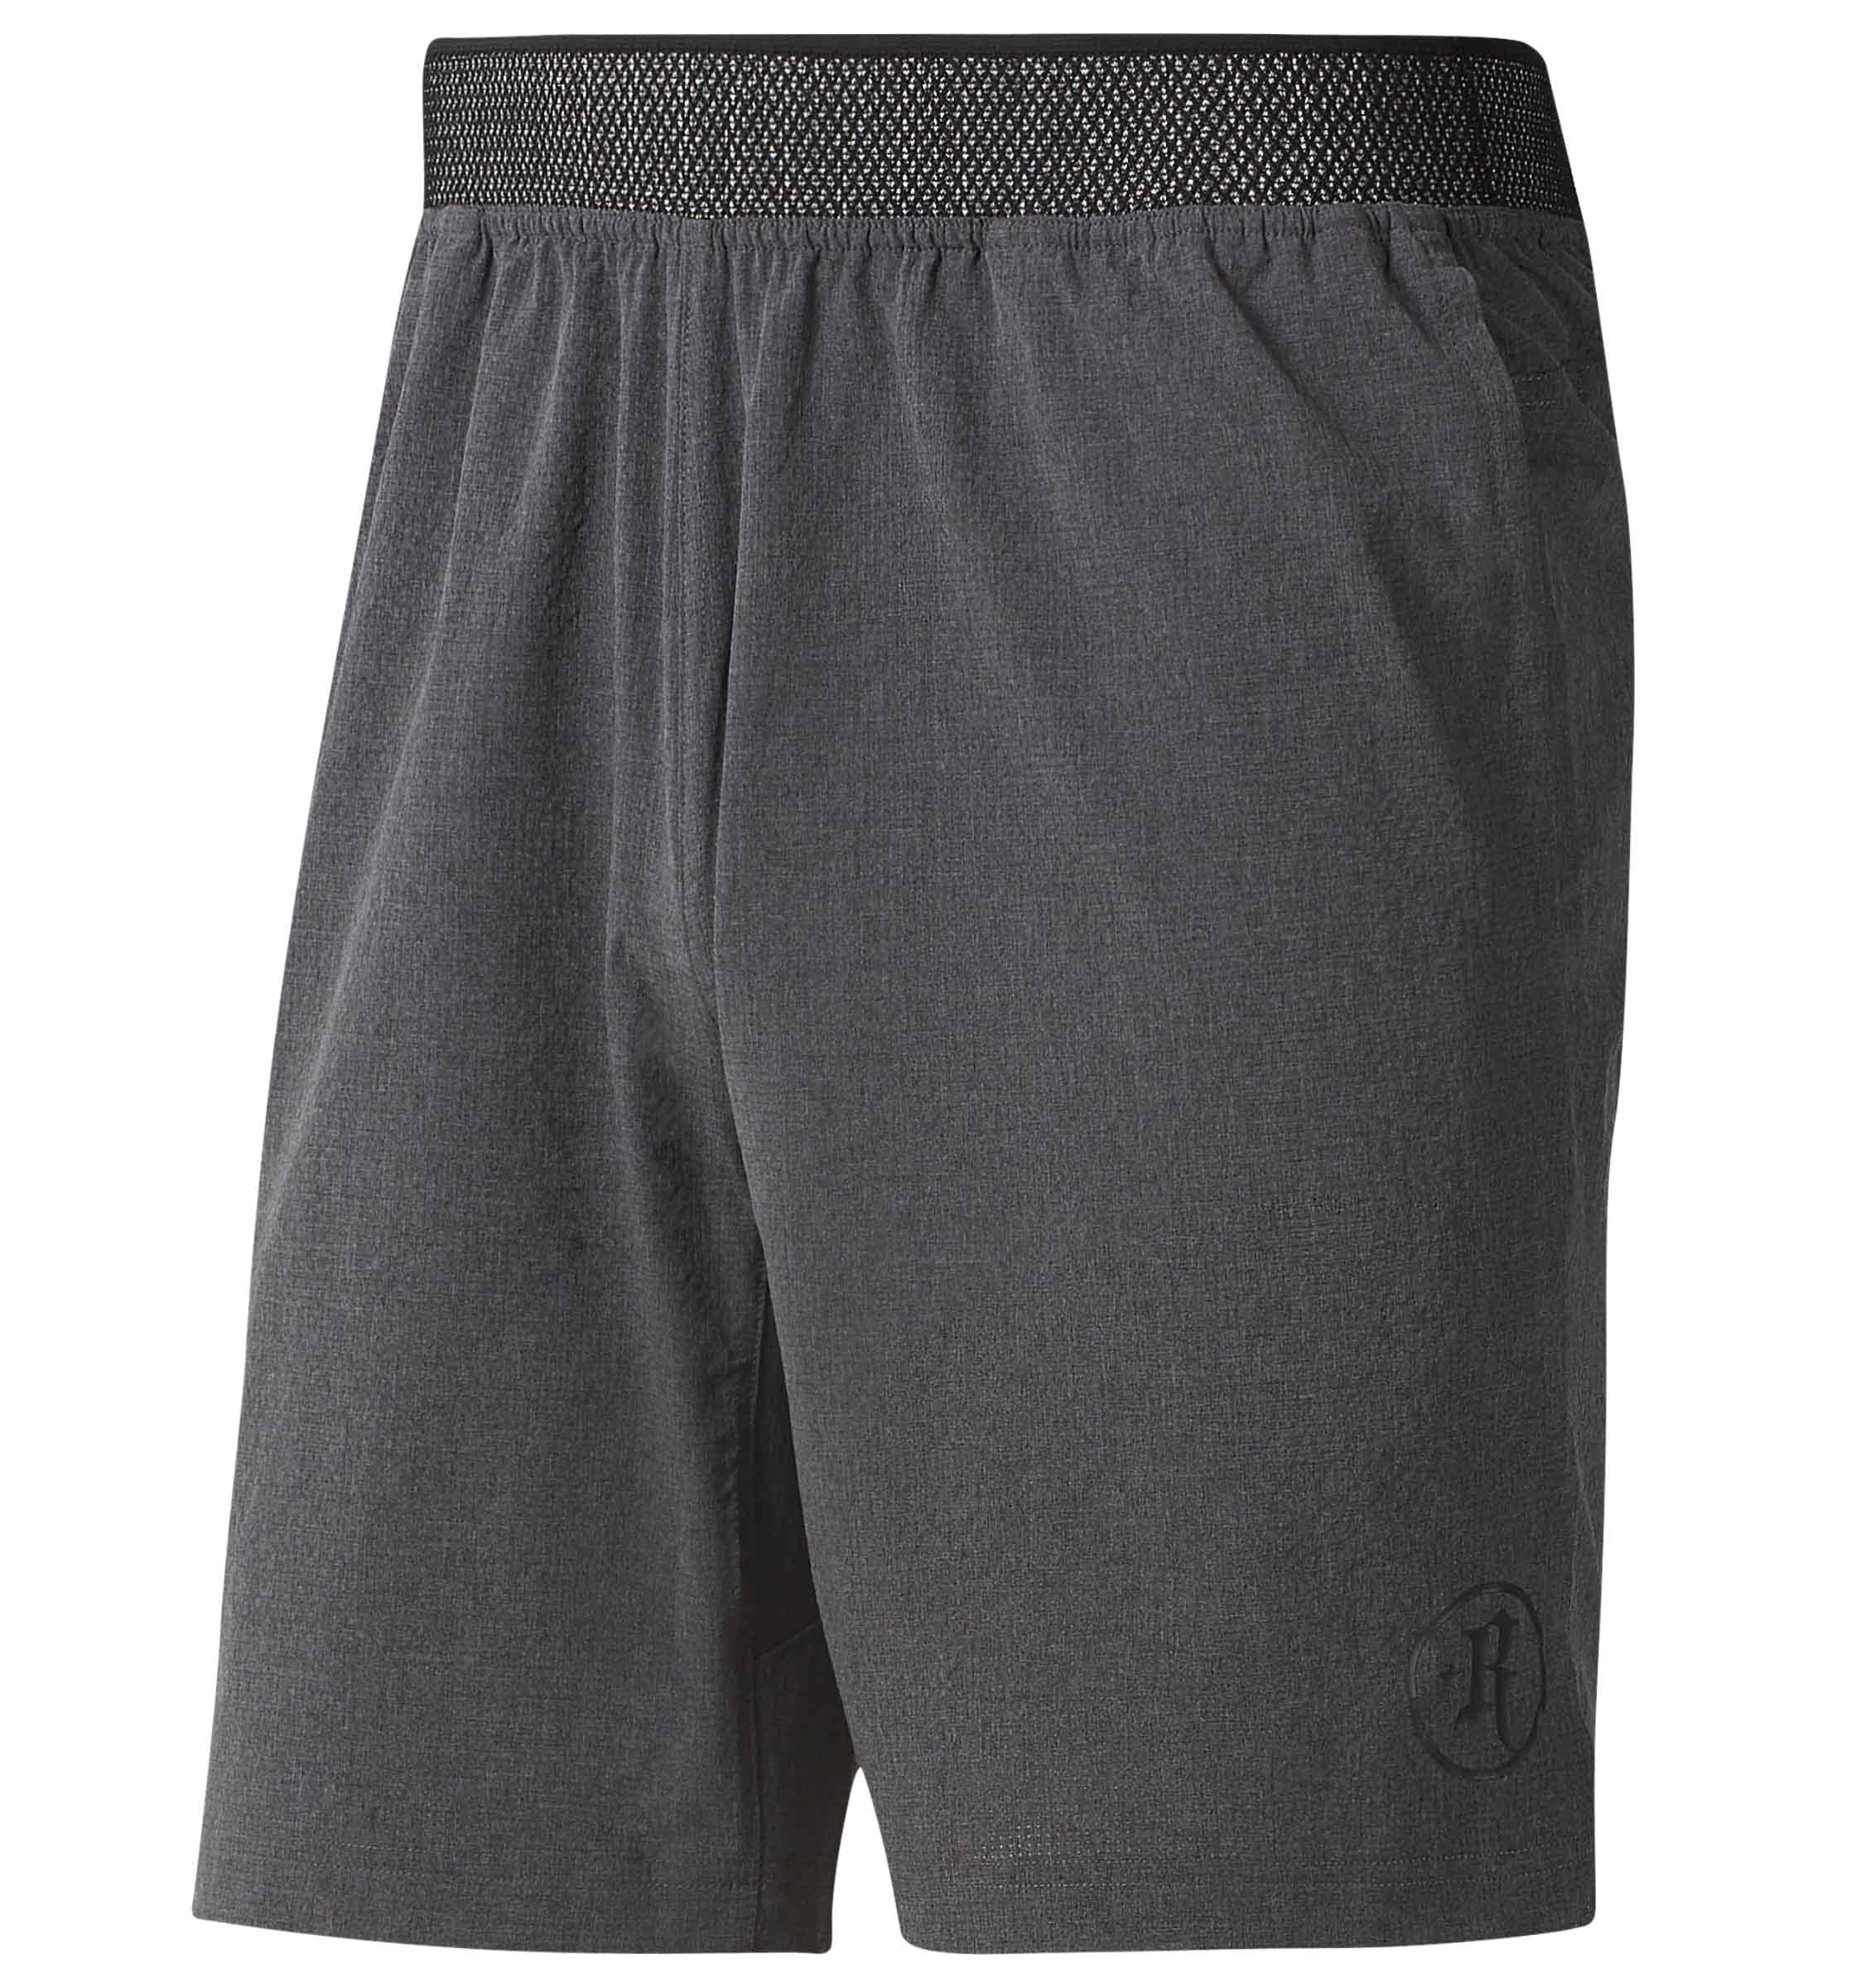 crossfit-shorts-froning